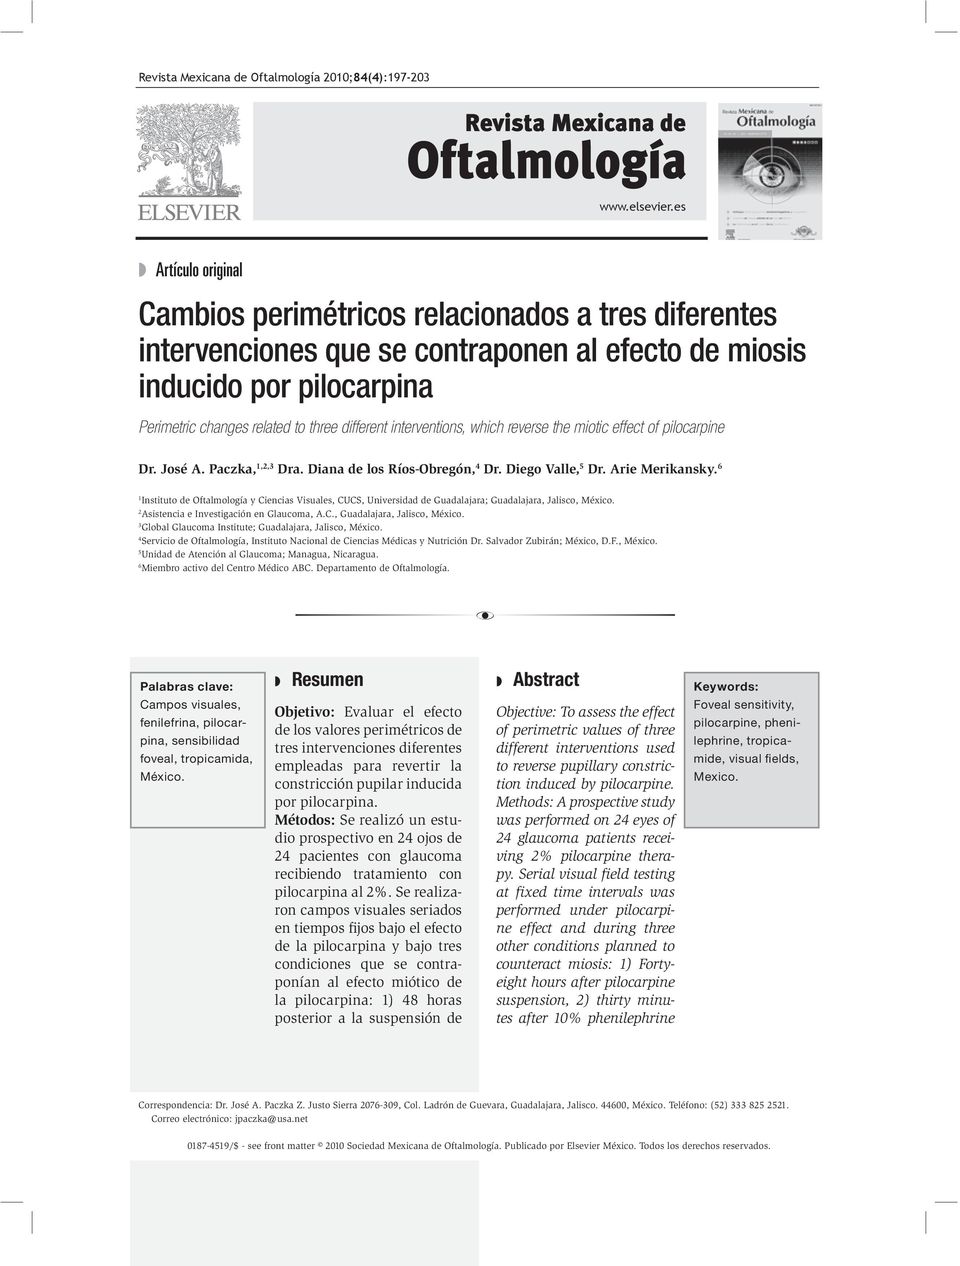 interventions, which reverse the miotic effect of pilocarpine Dr. José A. Paczka, 1,2,3 Dra. Diana de los Ríos-Obregón, 4 Dr. Diego Valle, 5 Dr. Arie Merikansky.